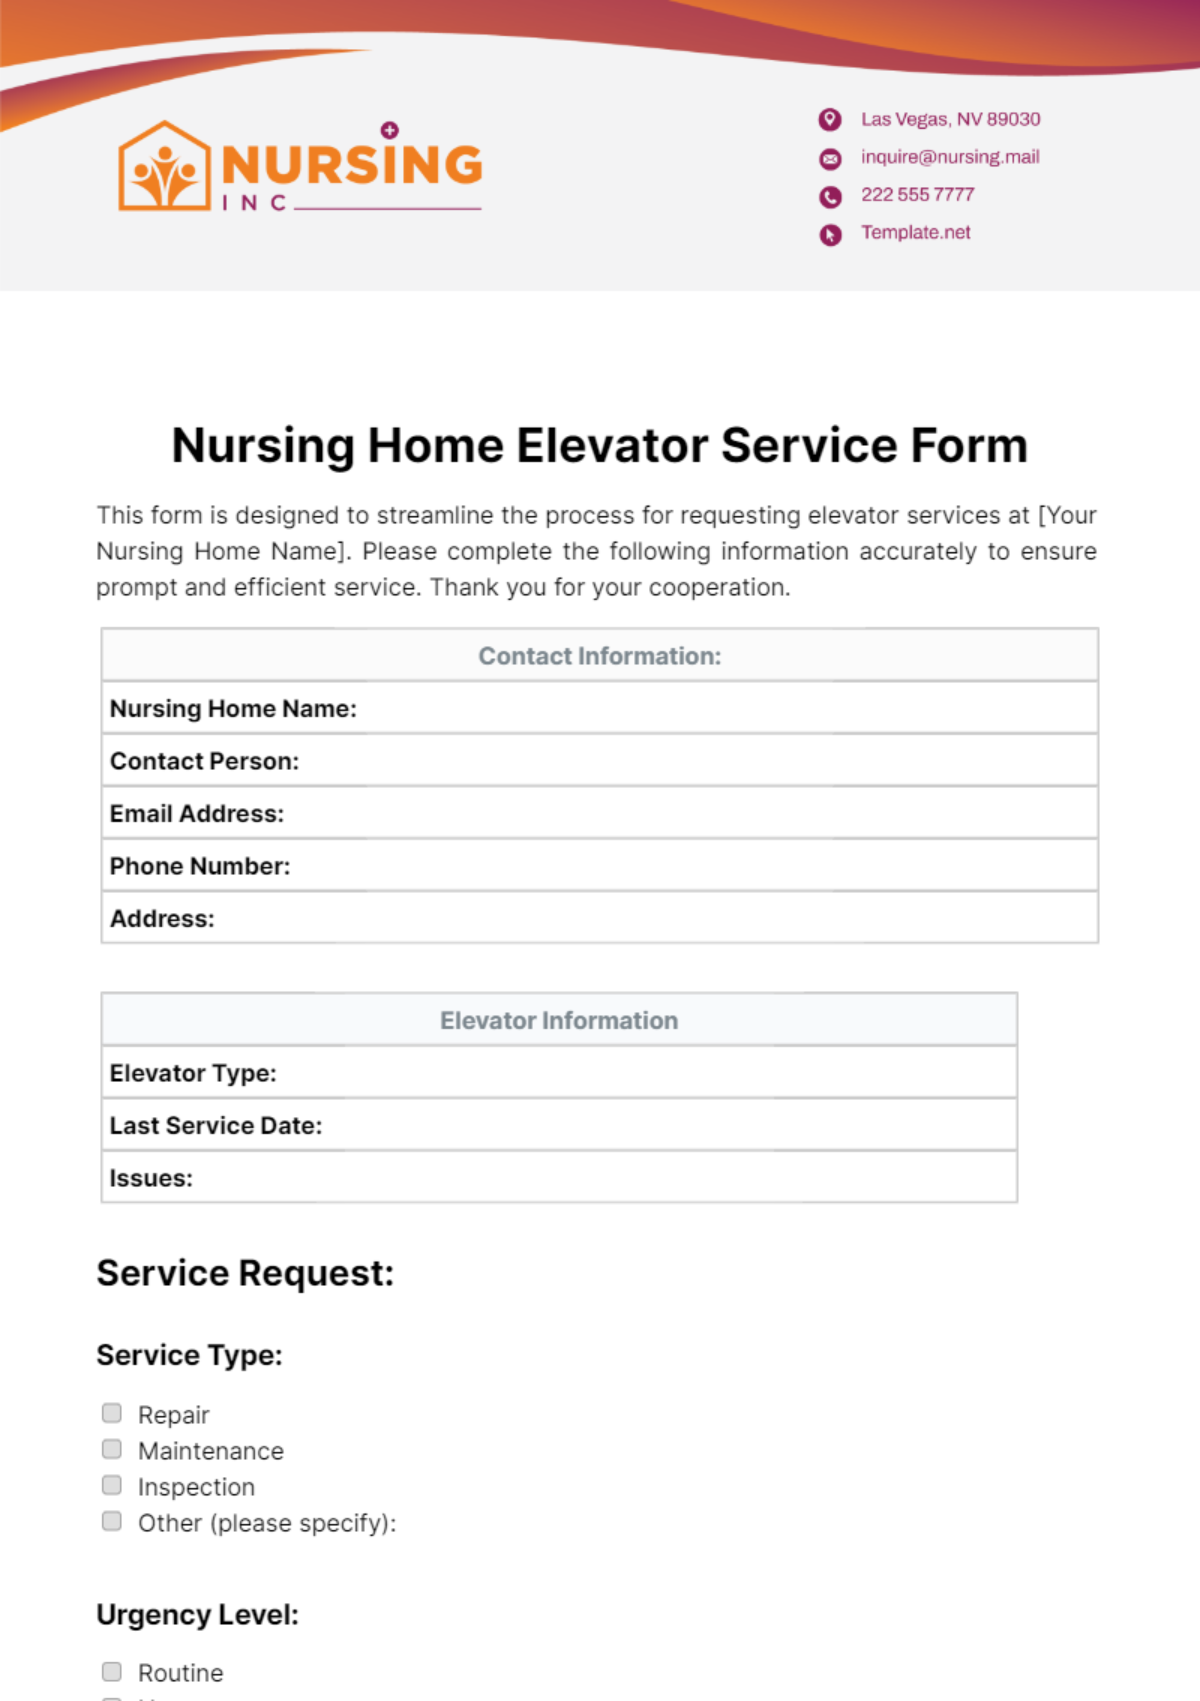 Nursing Home Elevator Service Form Template